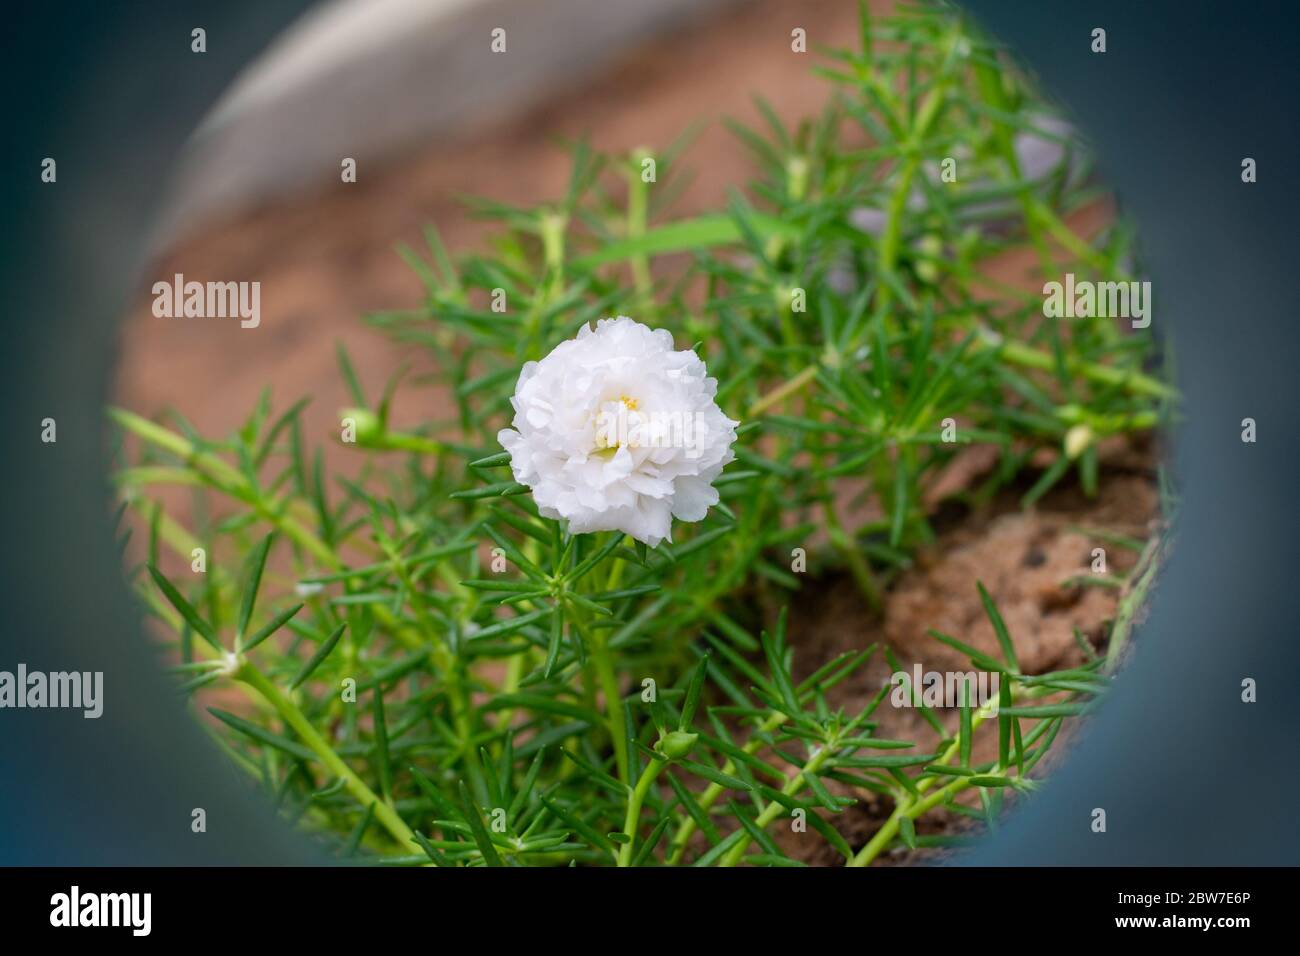 White flower in the garden called Common Purslane, Verdolaga, Pigweed, Little Hogweed, Portulaca, sun plant or Pusley. Stock Photo